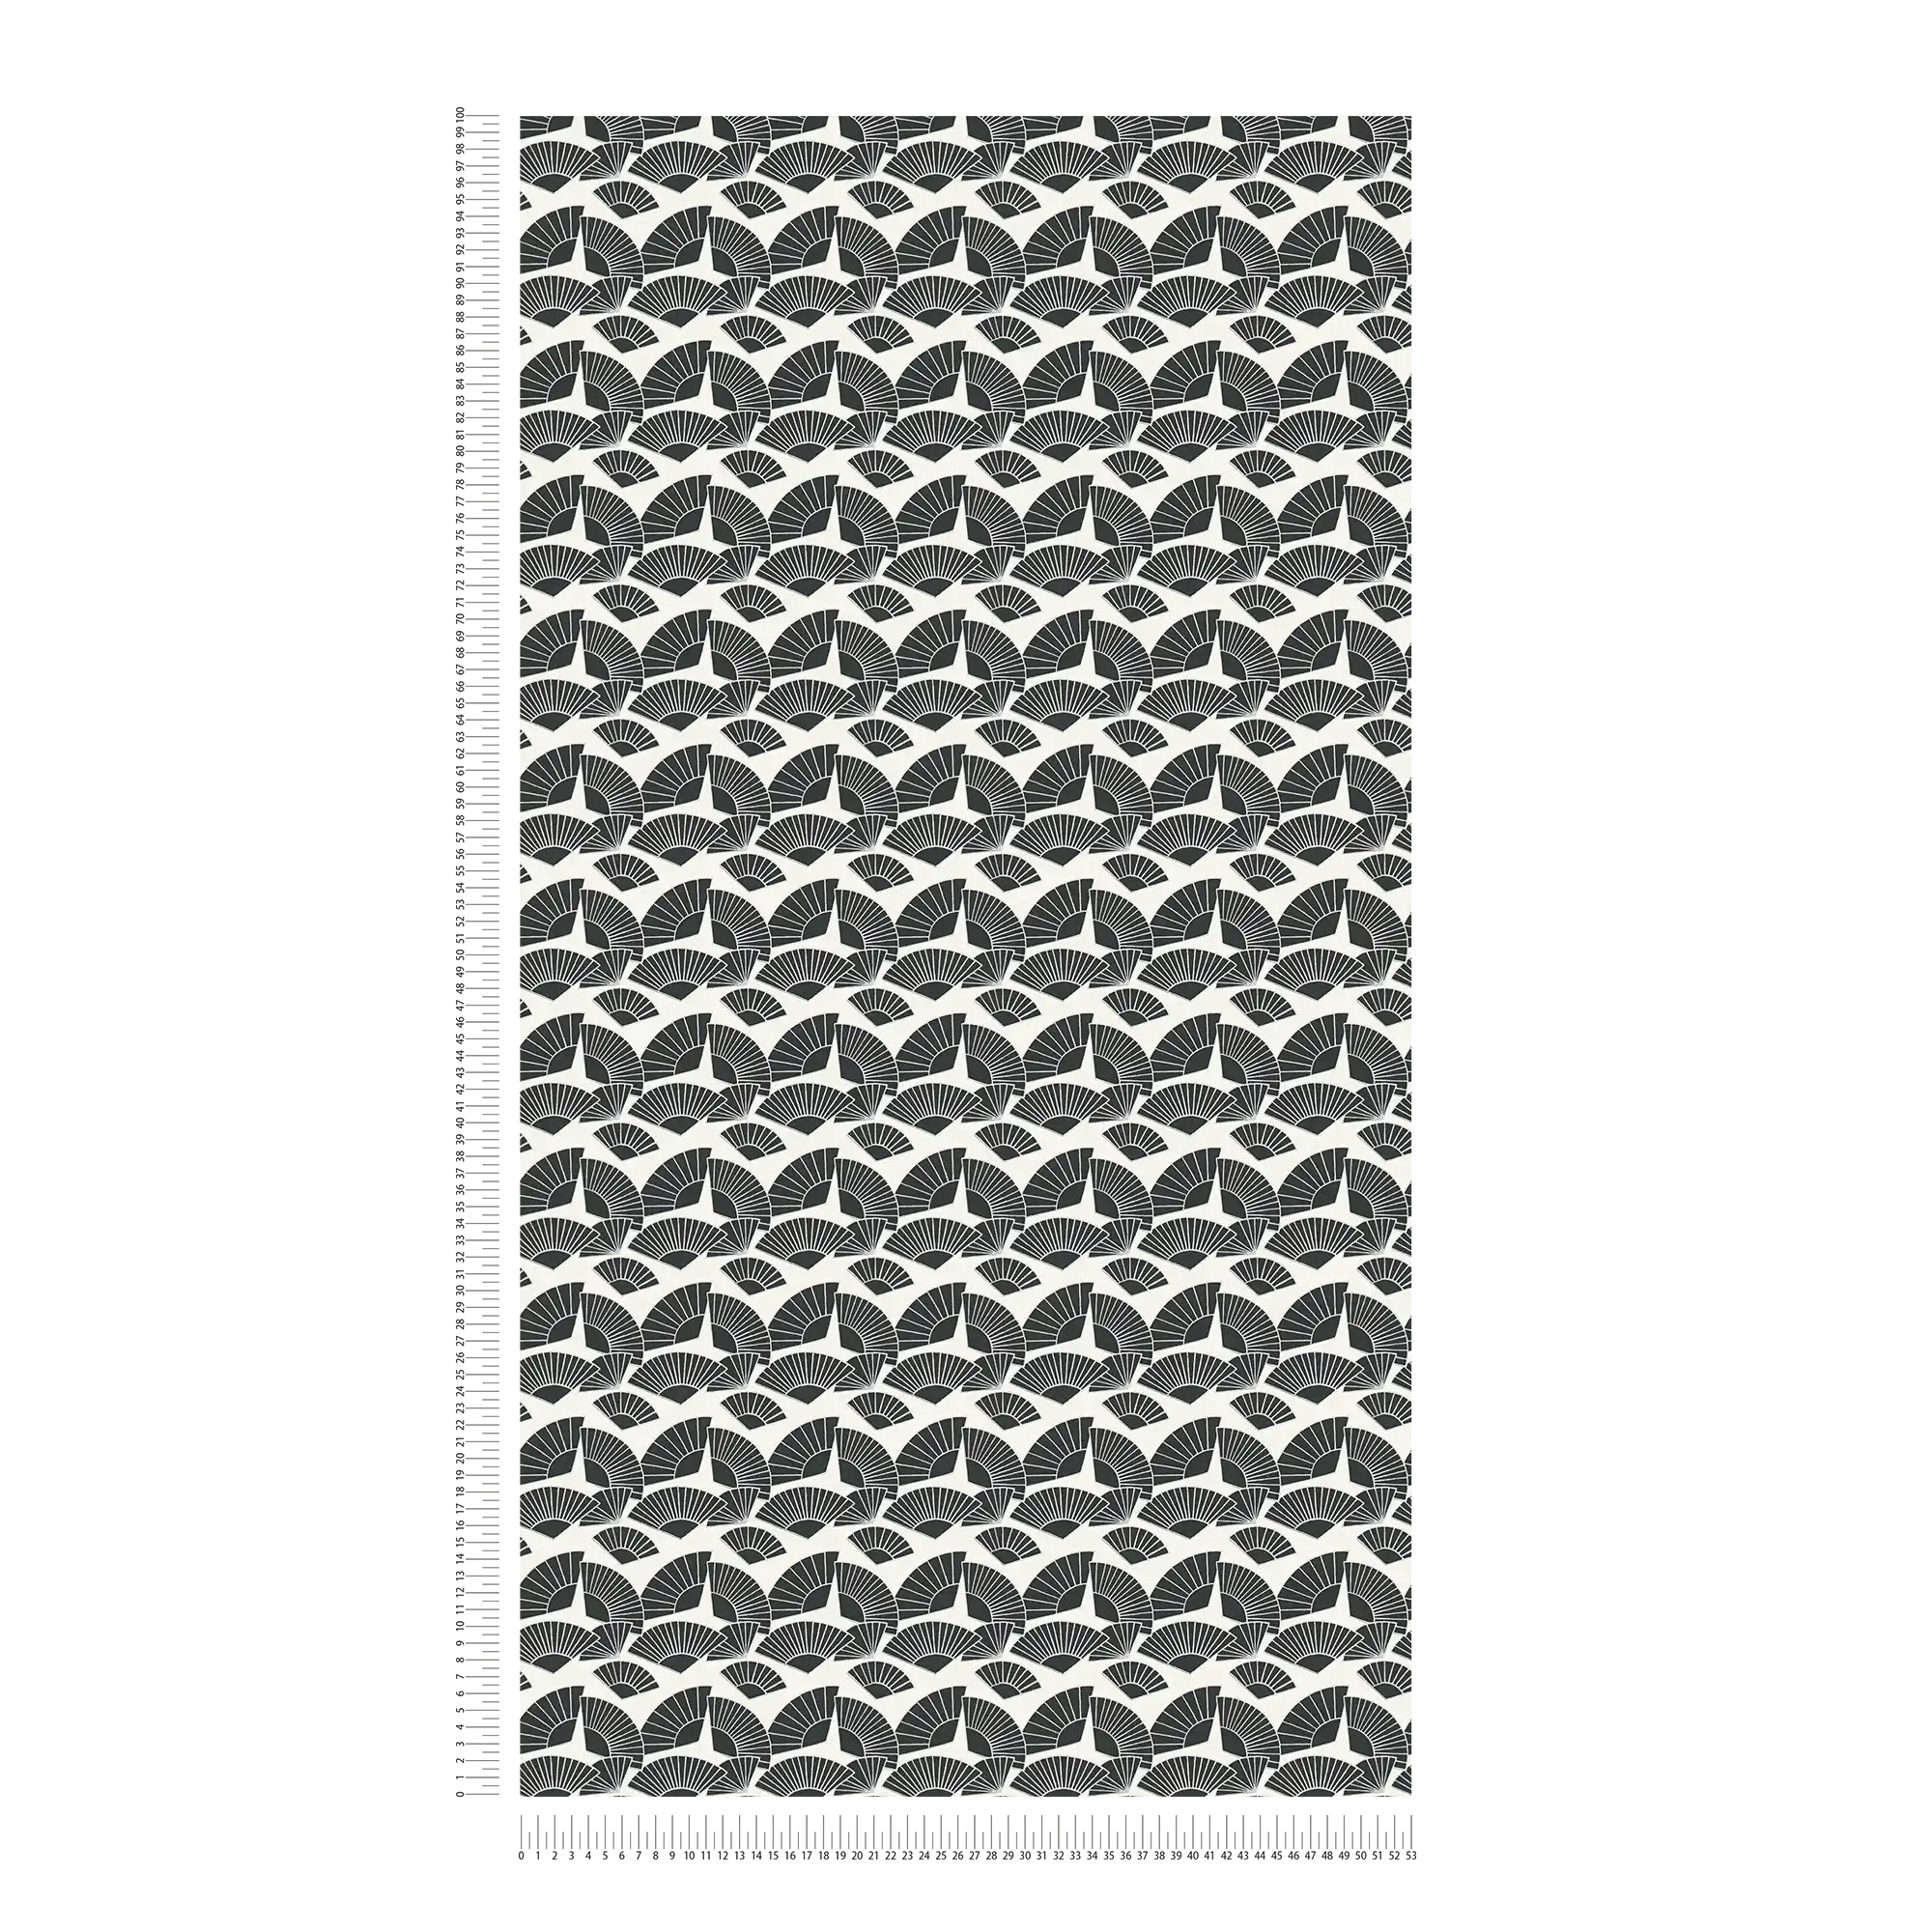             Papier peint Karl LAGERFELD motif éventail - métallique, noir, blanc
        